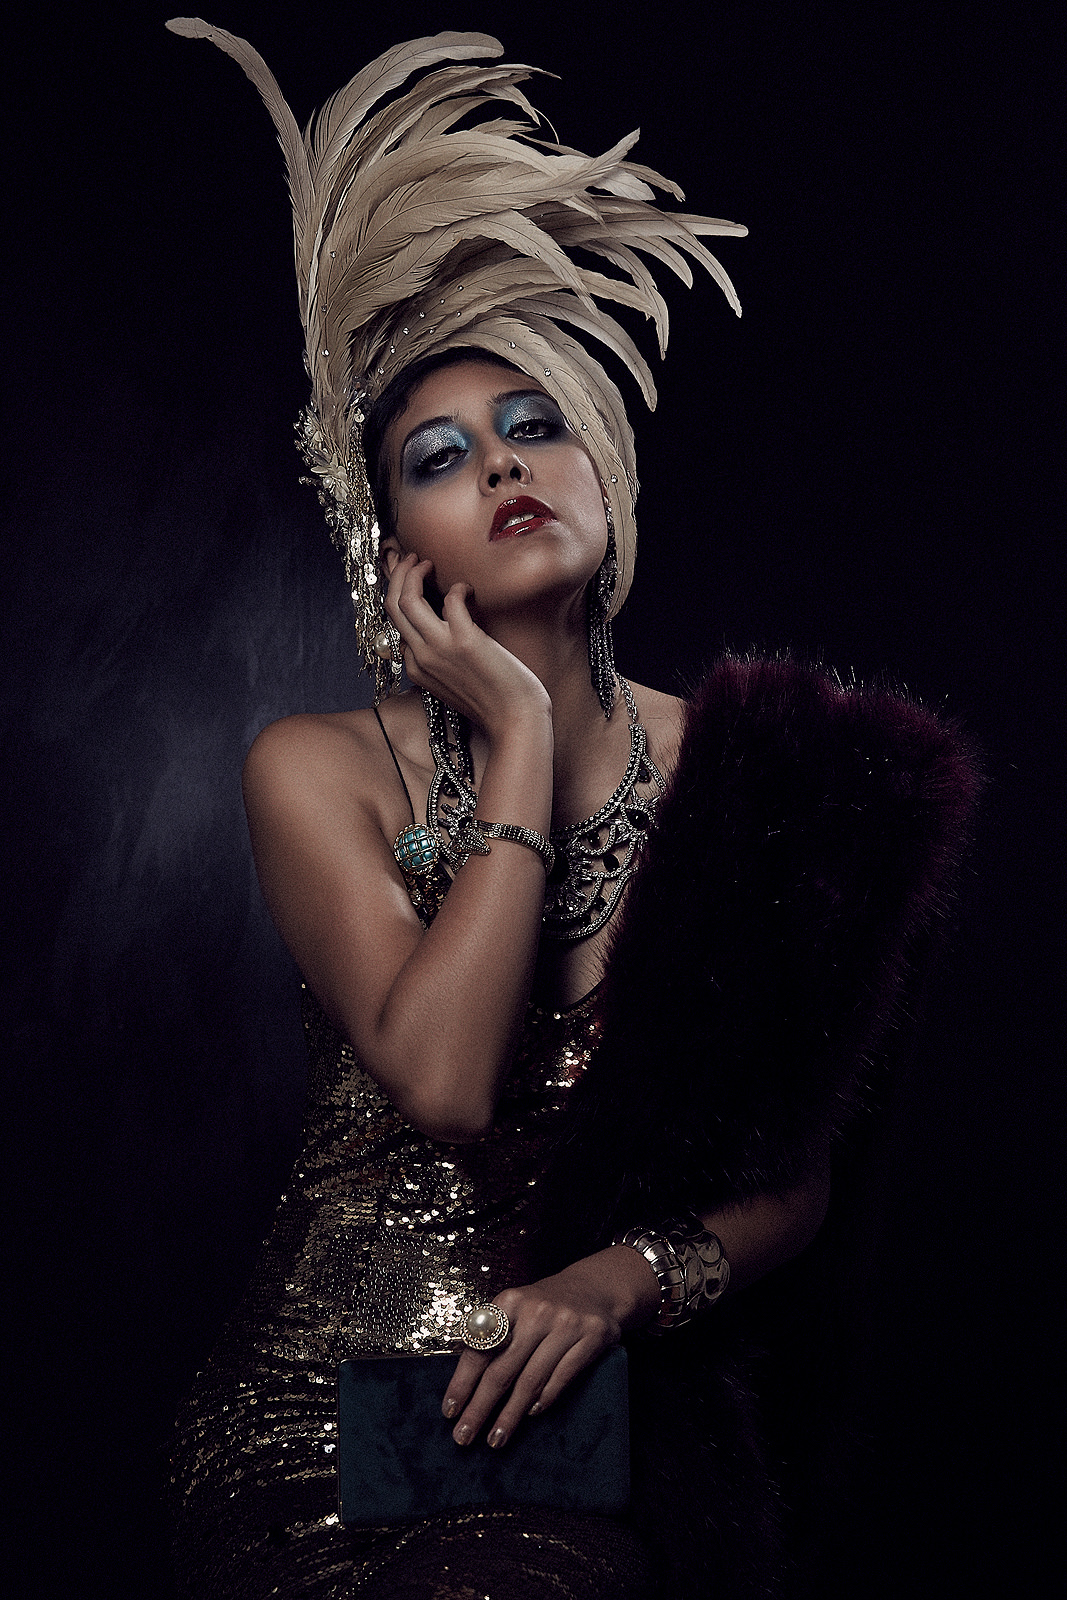 Fashion Editorial photographer marcosvaldés|FOTÓGRAFO® 'The Alley Cats'